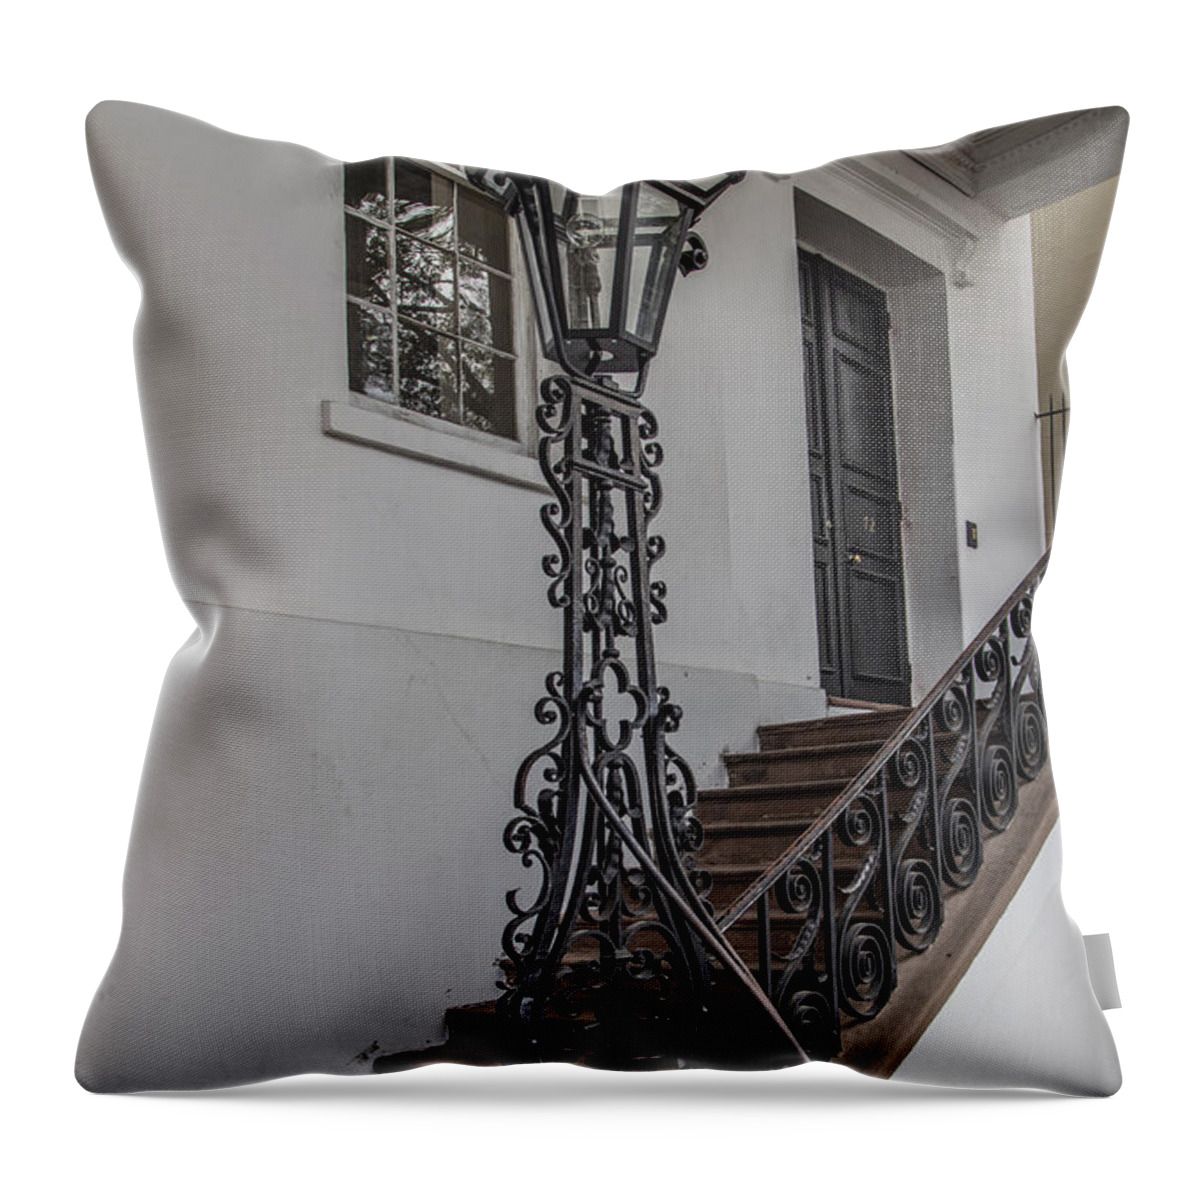 Charleston Throw Pillow featuring the photograph Charleston Stairwell by John McGraw